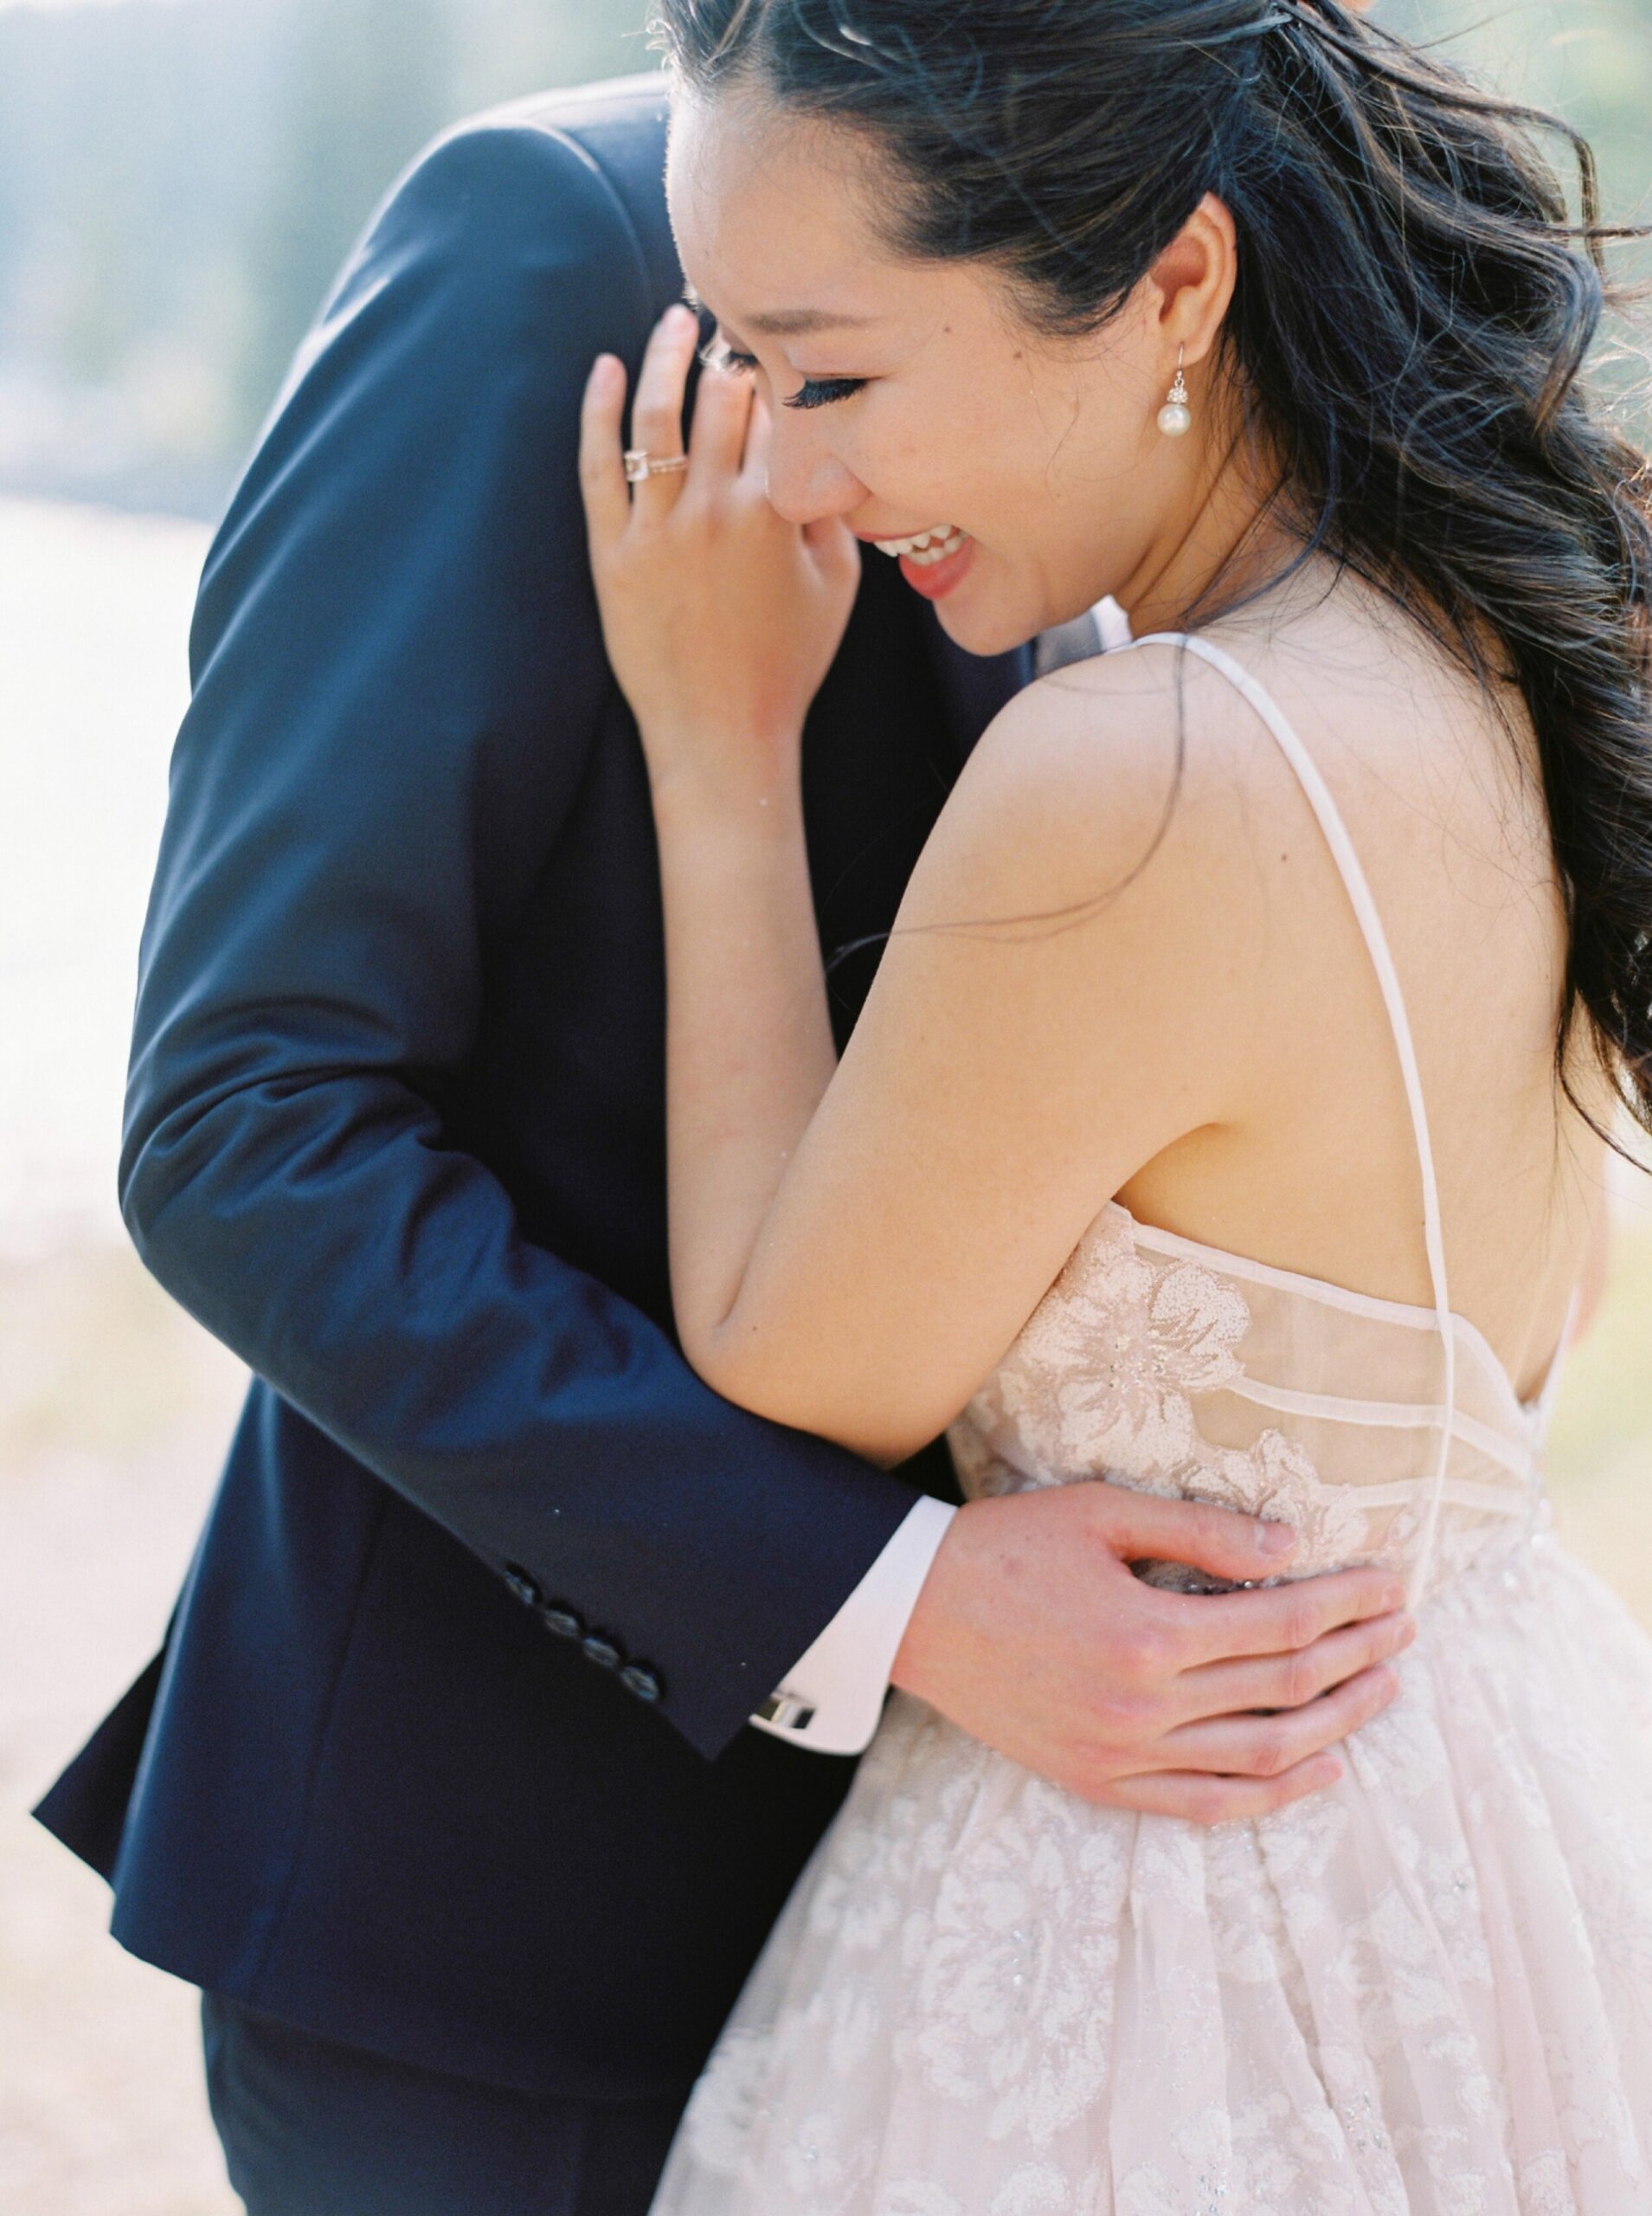  Banff wedding photographer | intimate wedding elopement | bride and groom portraits | justine milton photography 